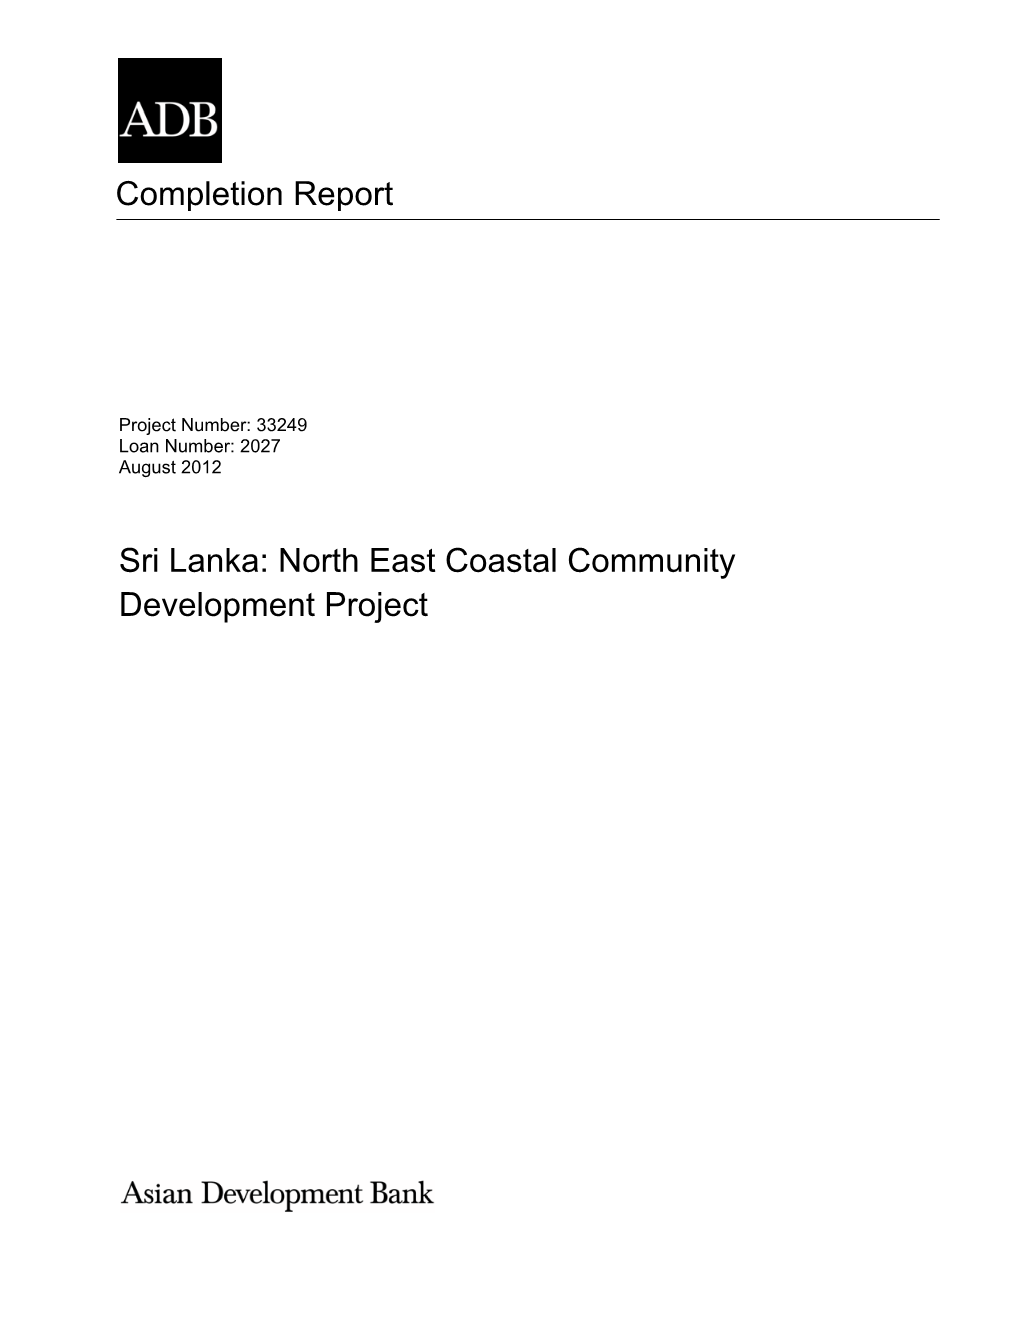 PCR: Sri Lanka: North East Coastal Community Development Project